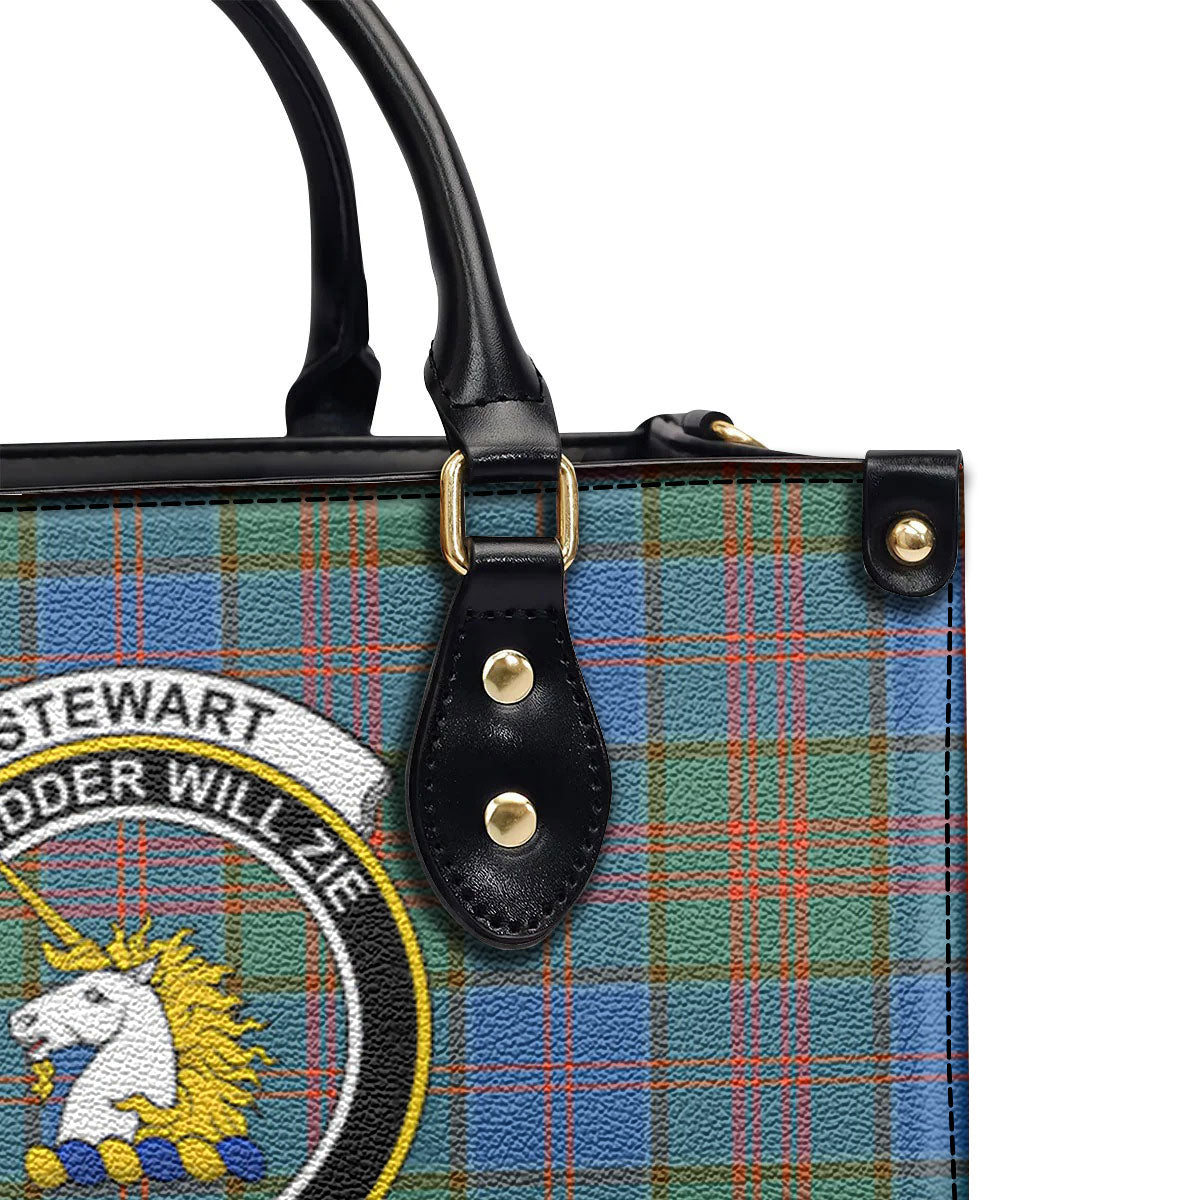 Stewart of Appin Hunting Ancient Tartan Crest Leather Handbag